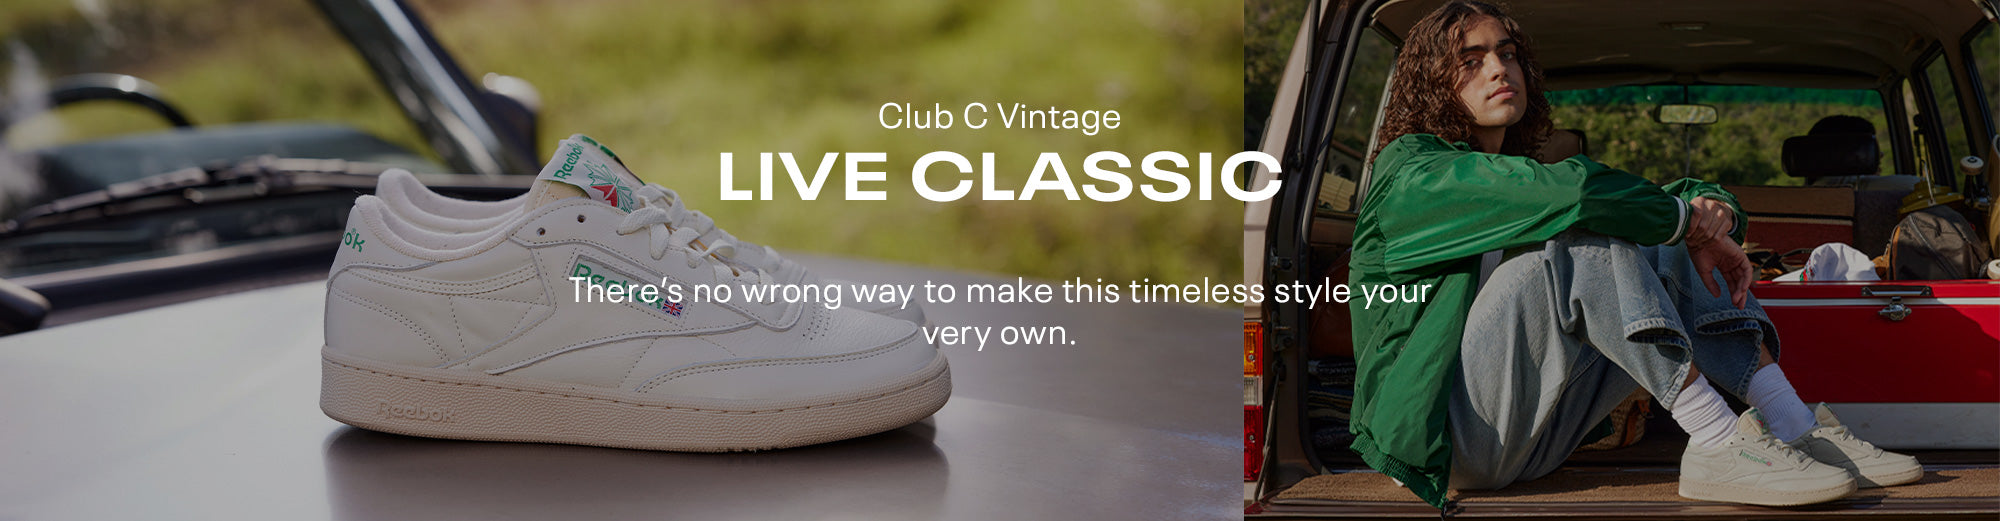 Reebok Women's Club C 85 Vintage Sneakers, Chalk